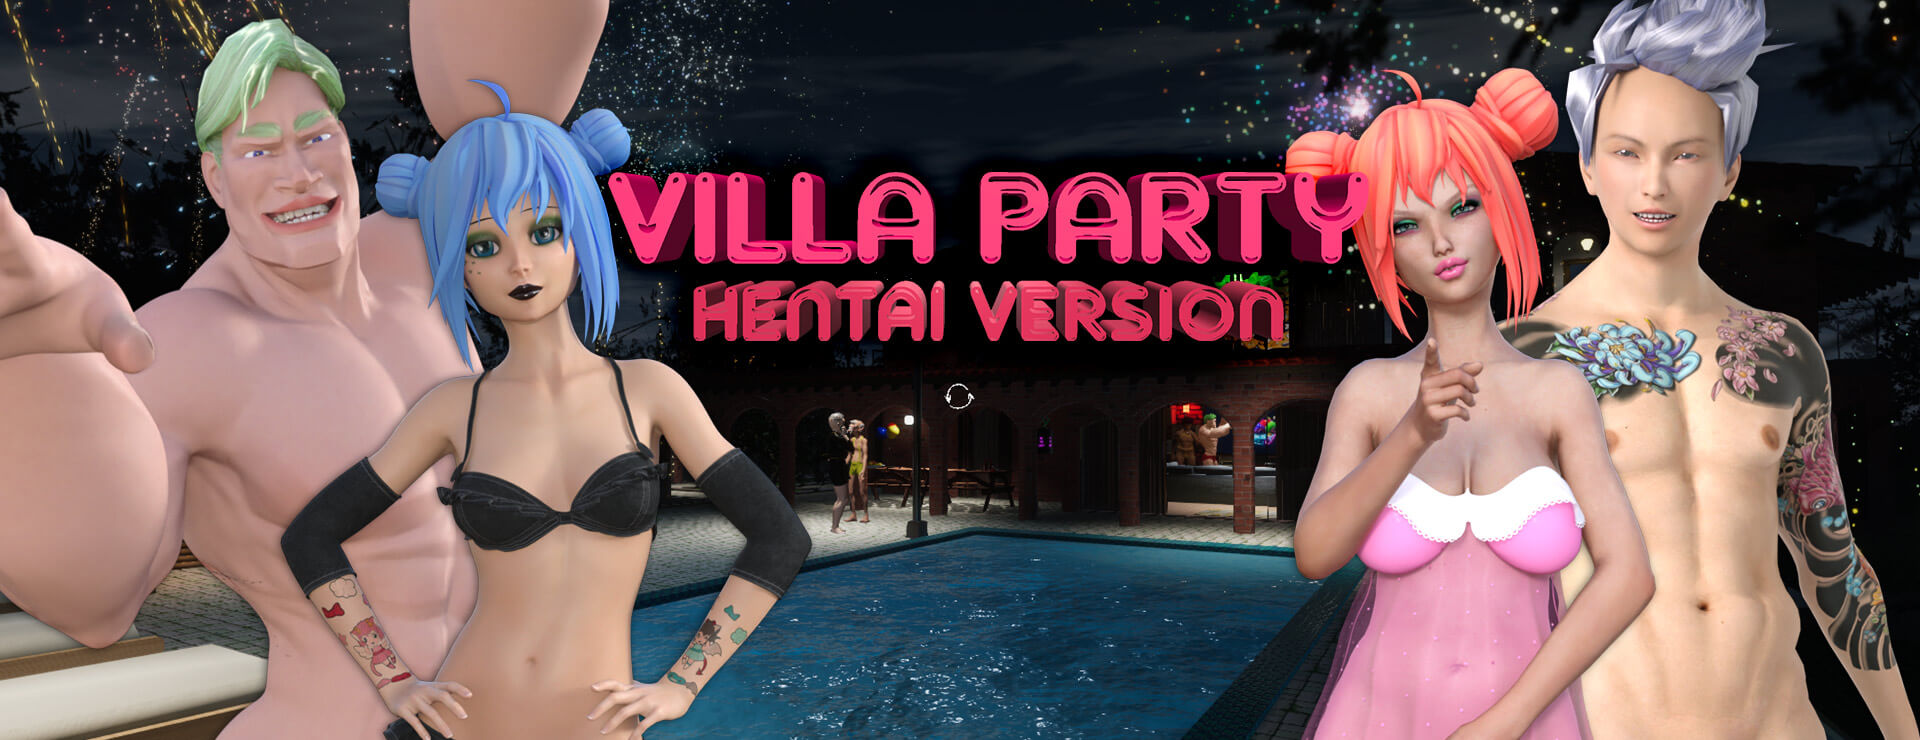 Villa Party – Hentai Version - Action Adventure Game